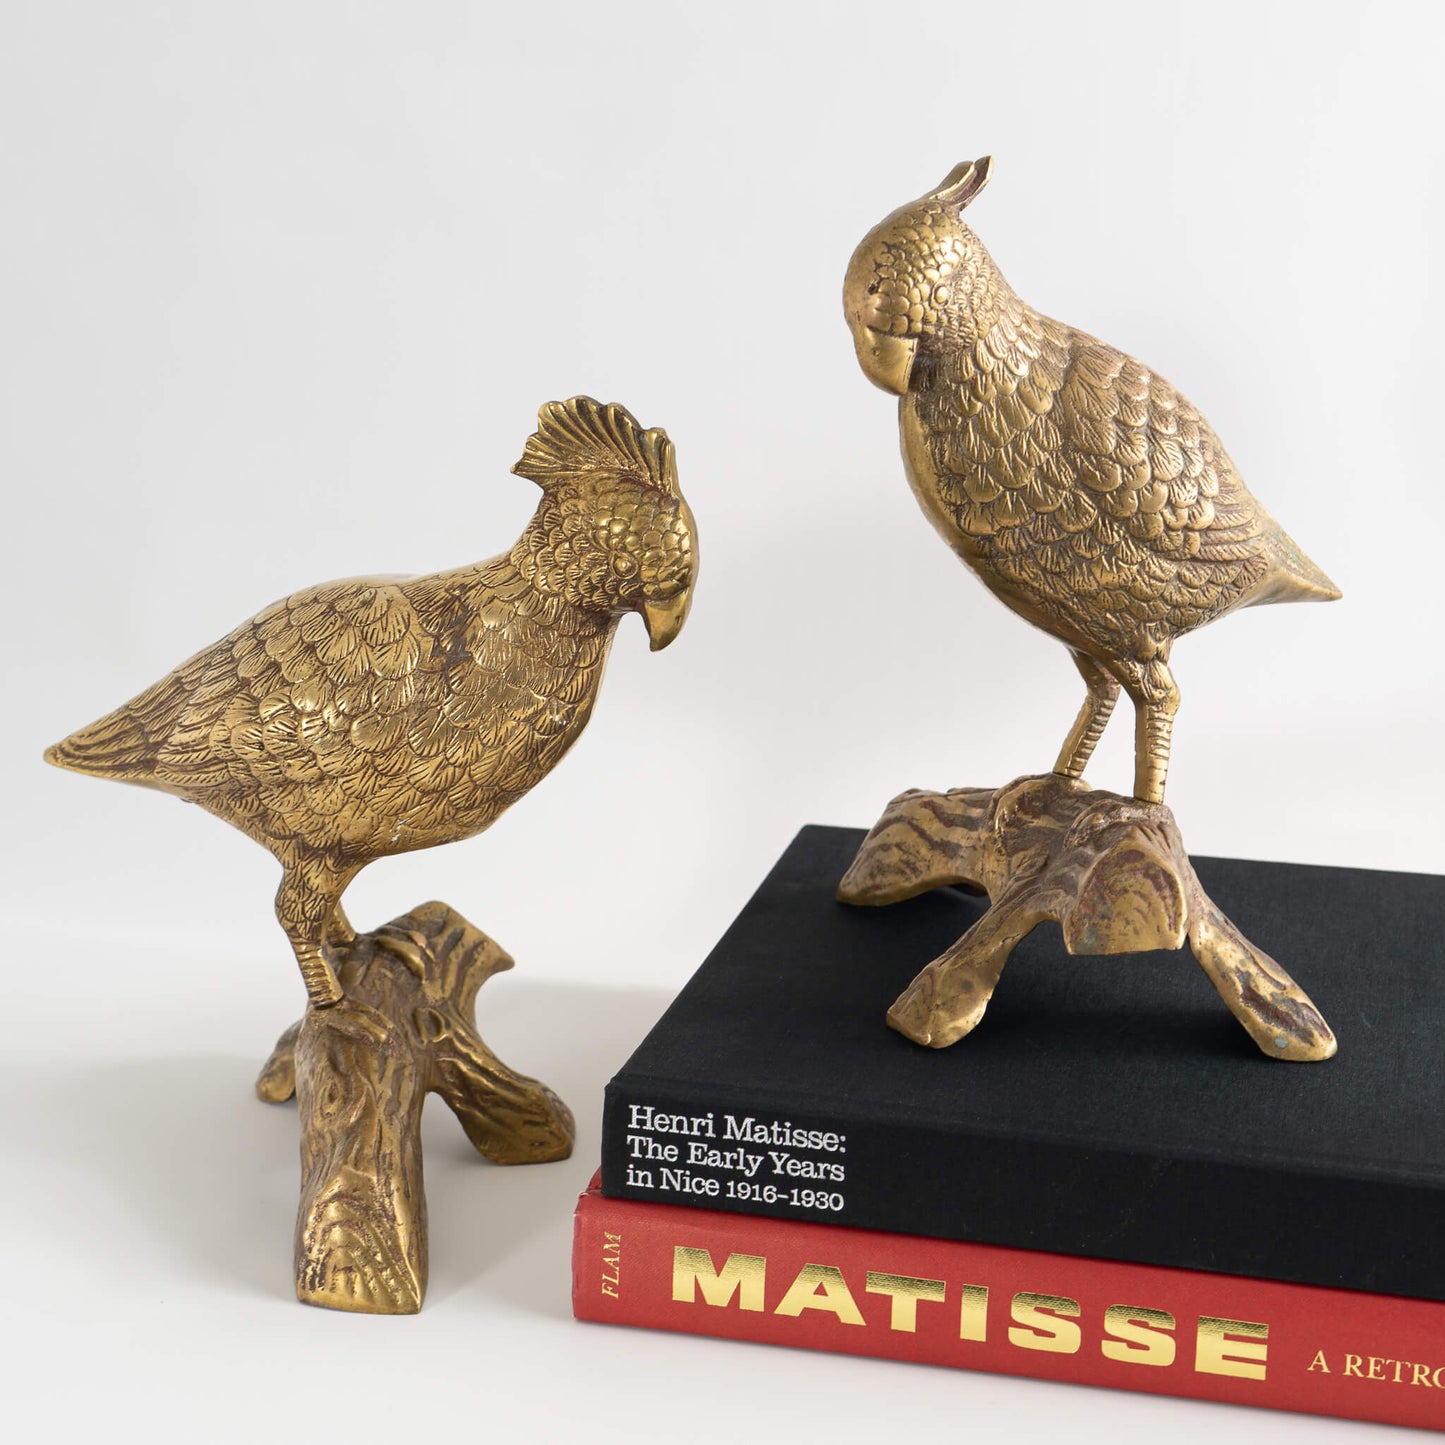 Load image into Gallery viewer, Vintage Brass Parrot Love Bird Sculptures
